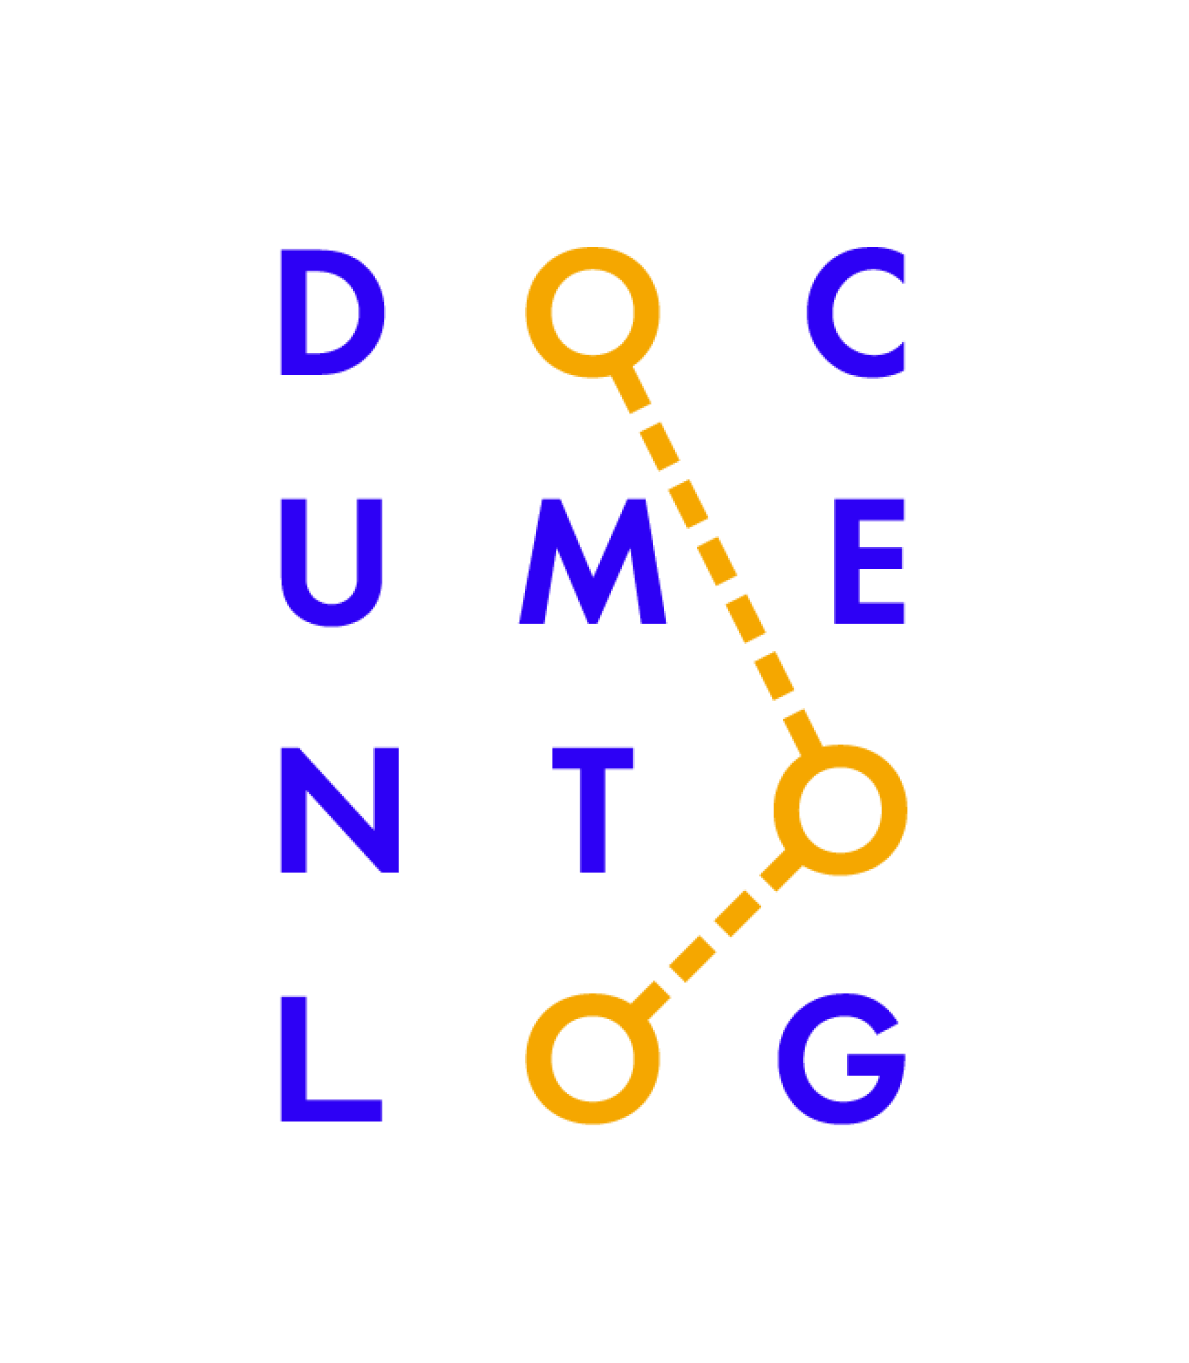 ТОО "Projects Documentolog"-logo